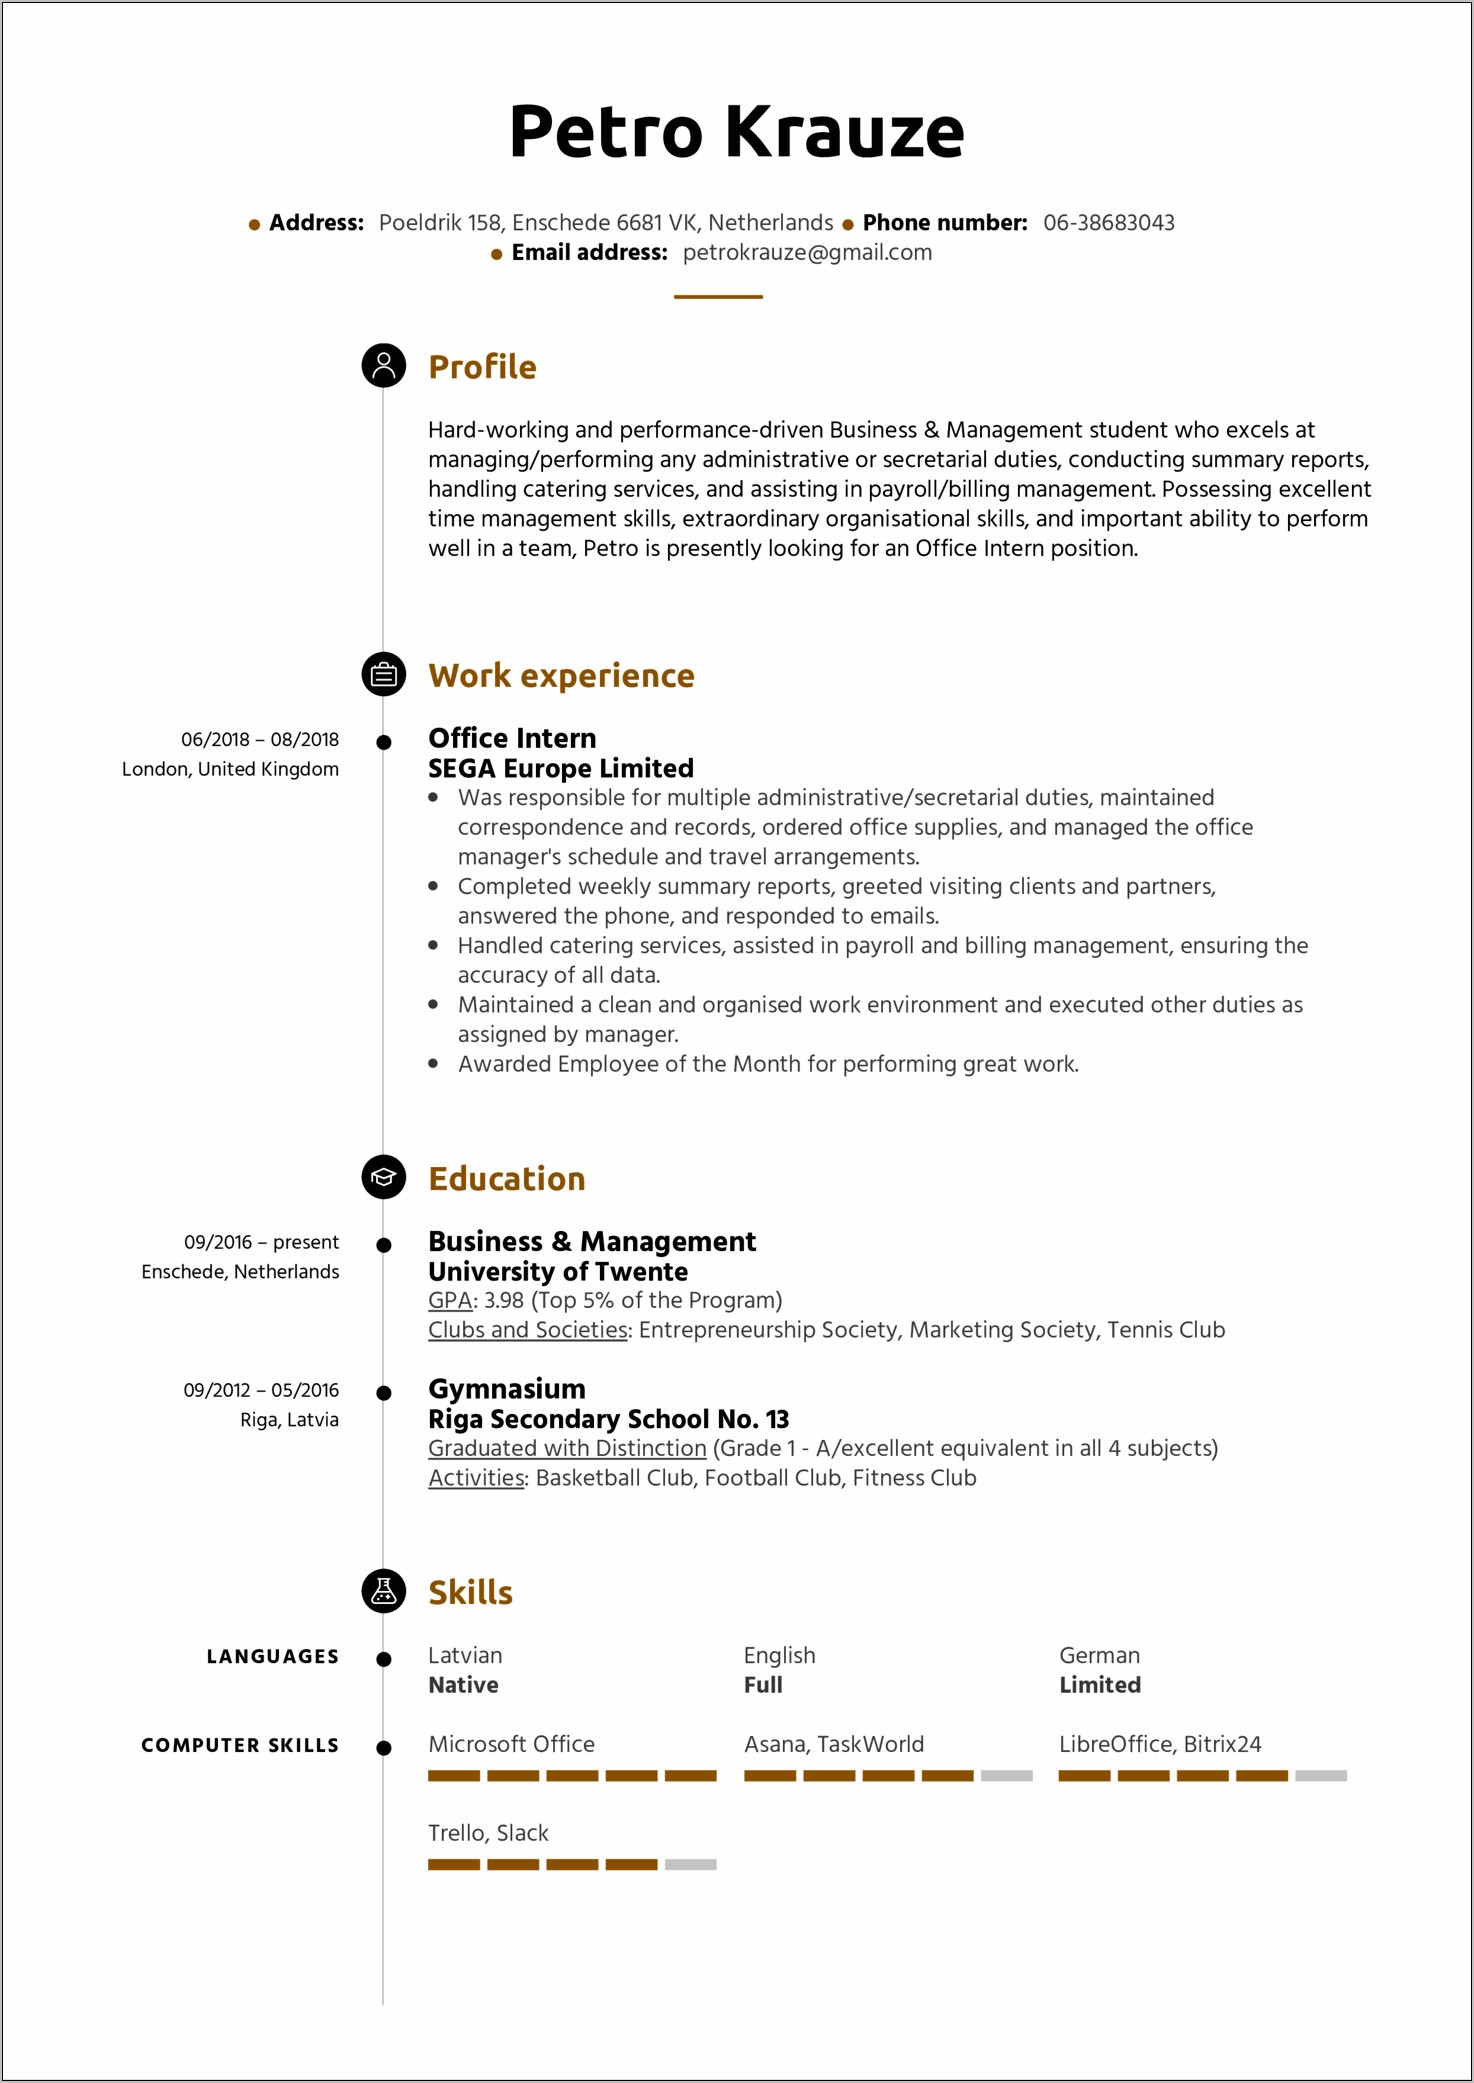 Resume Objective For Internship Application Samples